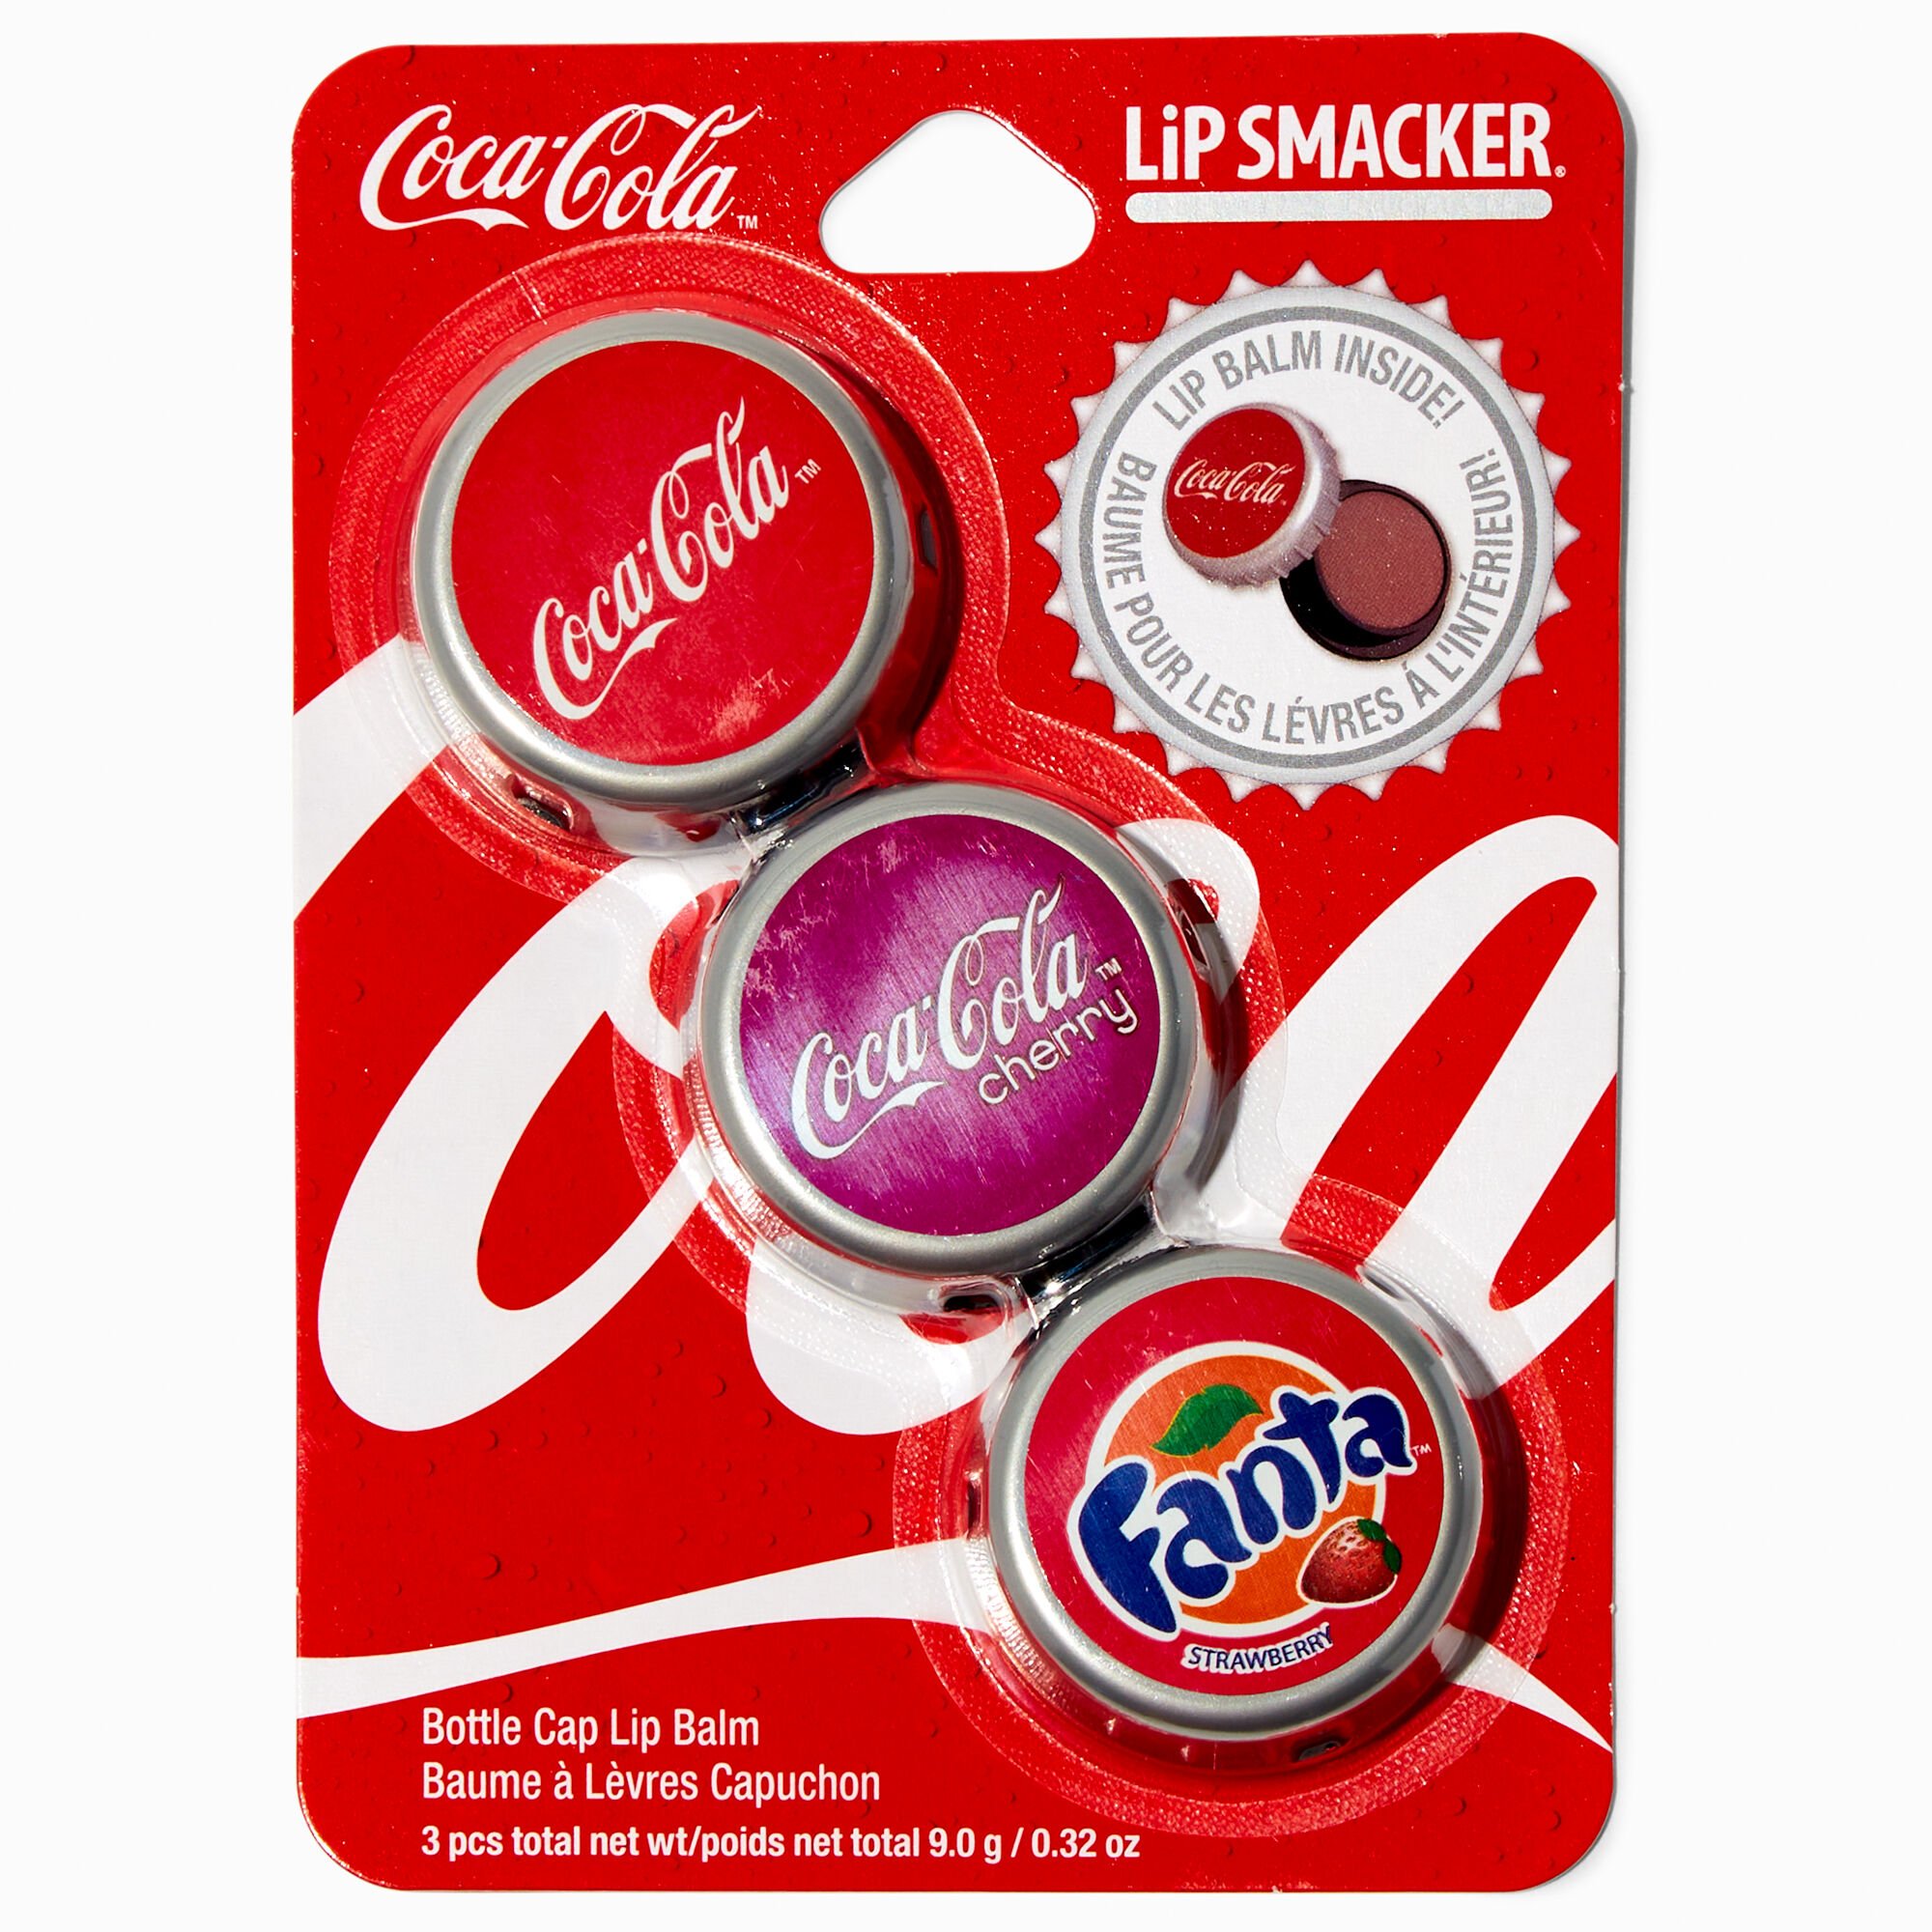 View Claires Lip Smacker CocaCola Bottle Cap Balm 3 Pack information